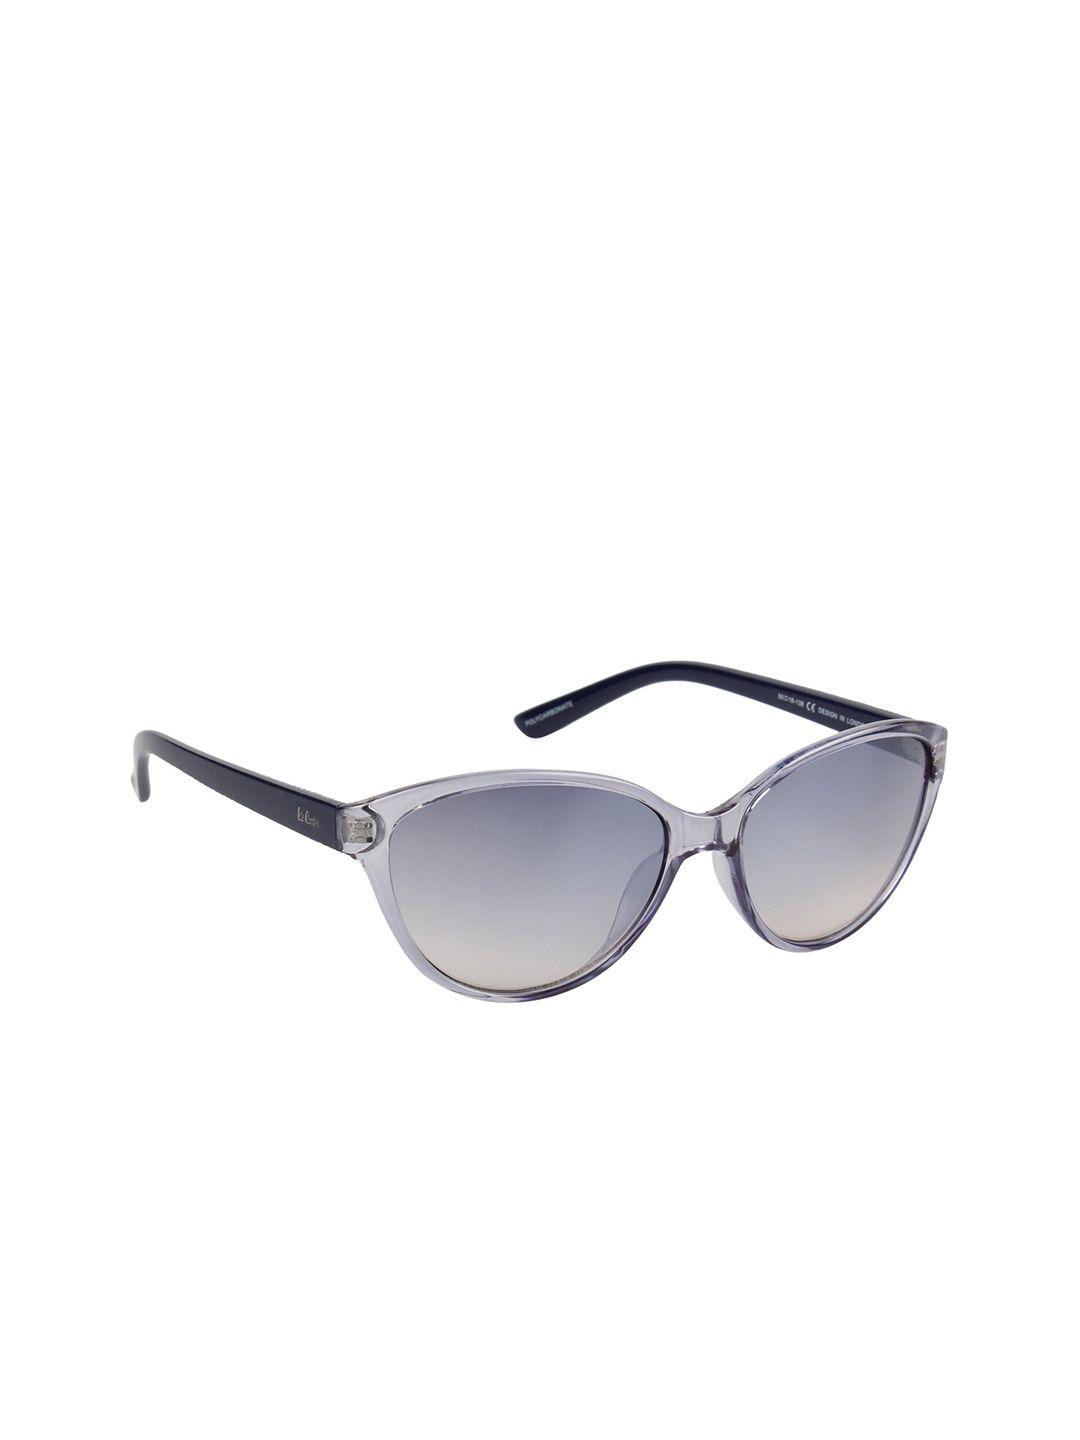 lee cooper women's blue sunglasses